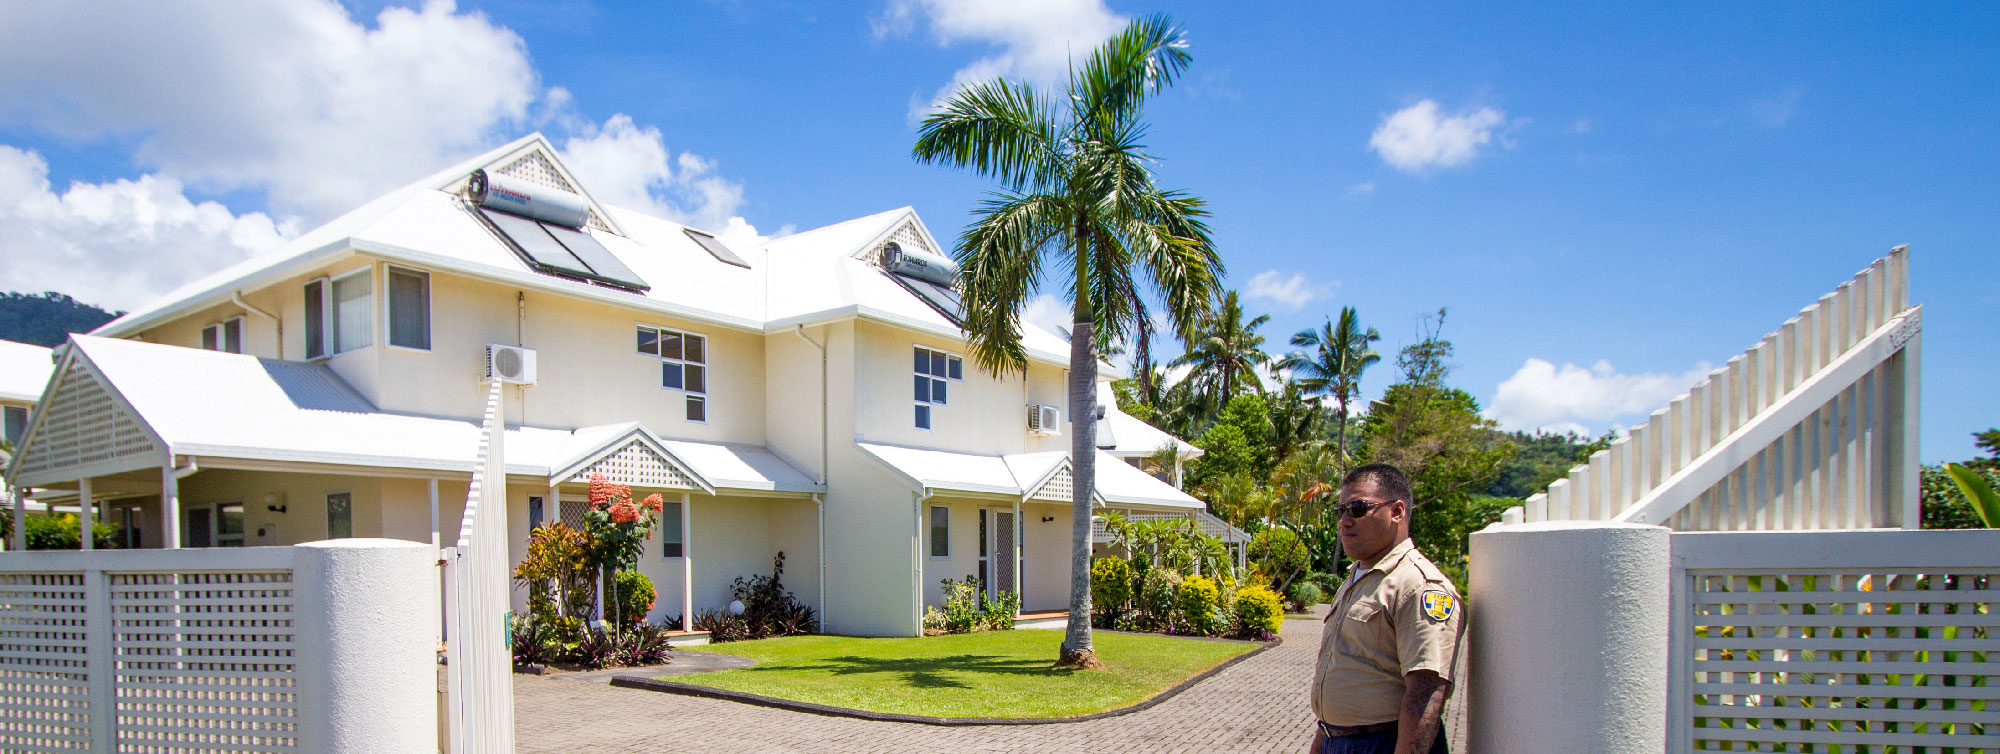 Rental Houses Apia Samoa Accommodation Motootua Security